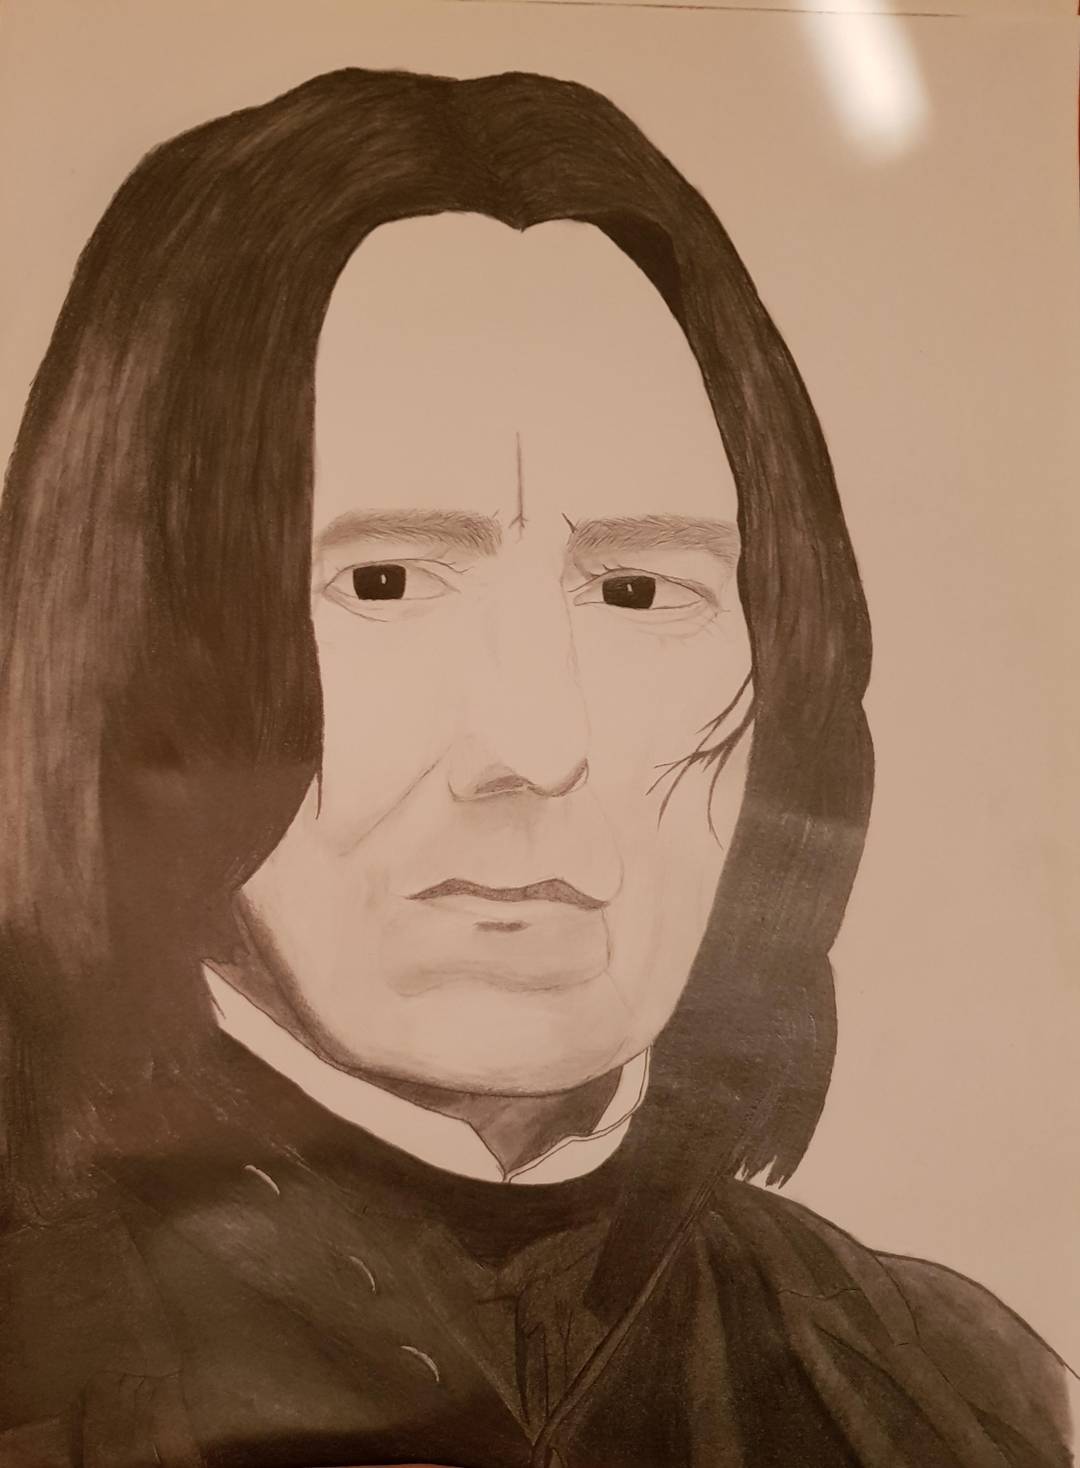 Severus Snape Drawing  Sketch by Hediyelik Karakalem on Dribbble